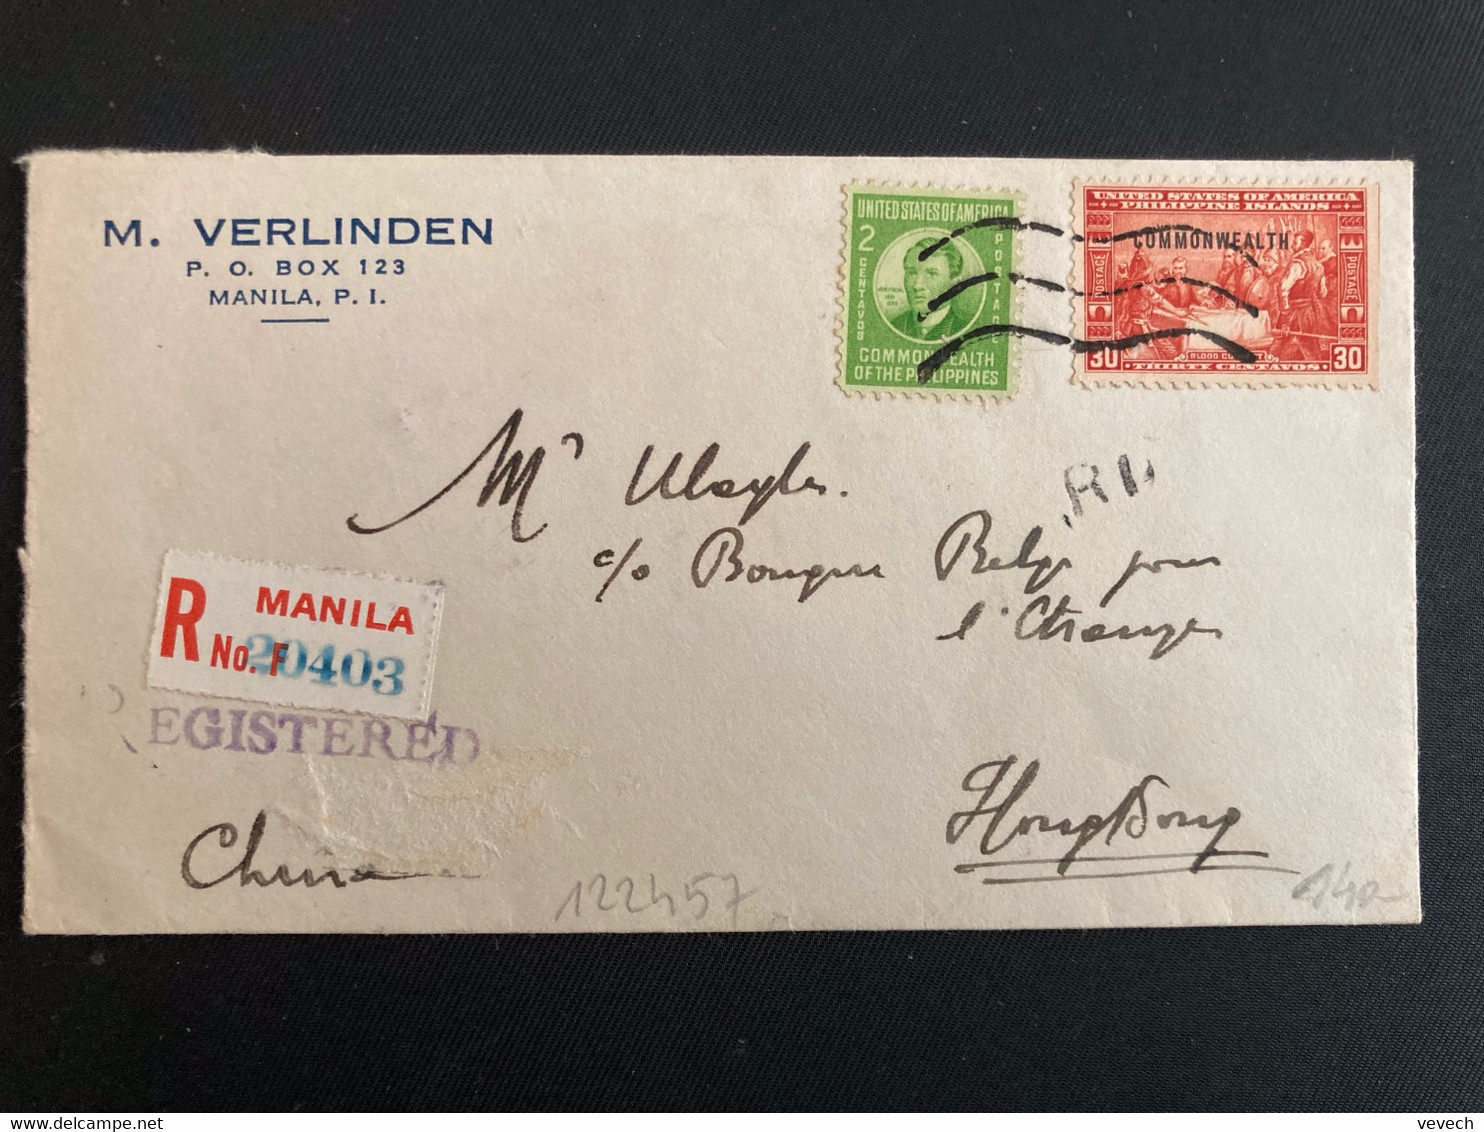 LR Pour HONG KONG CHINE TP 2c + TP 30 Surch. COMMONWEALTH OBL. + JUL 15 1941 REGISTERED + VERLINDEN MANILA - Philippinen